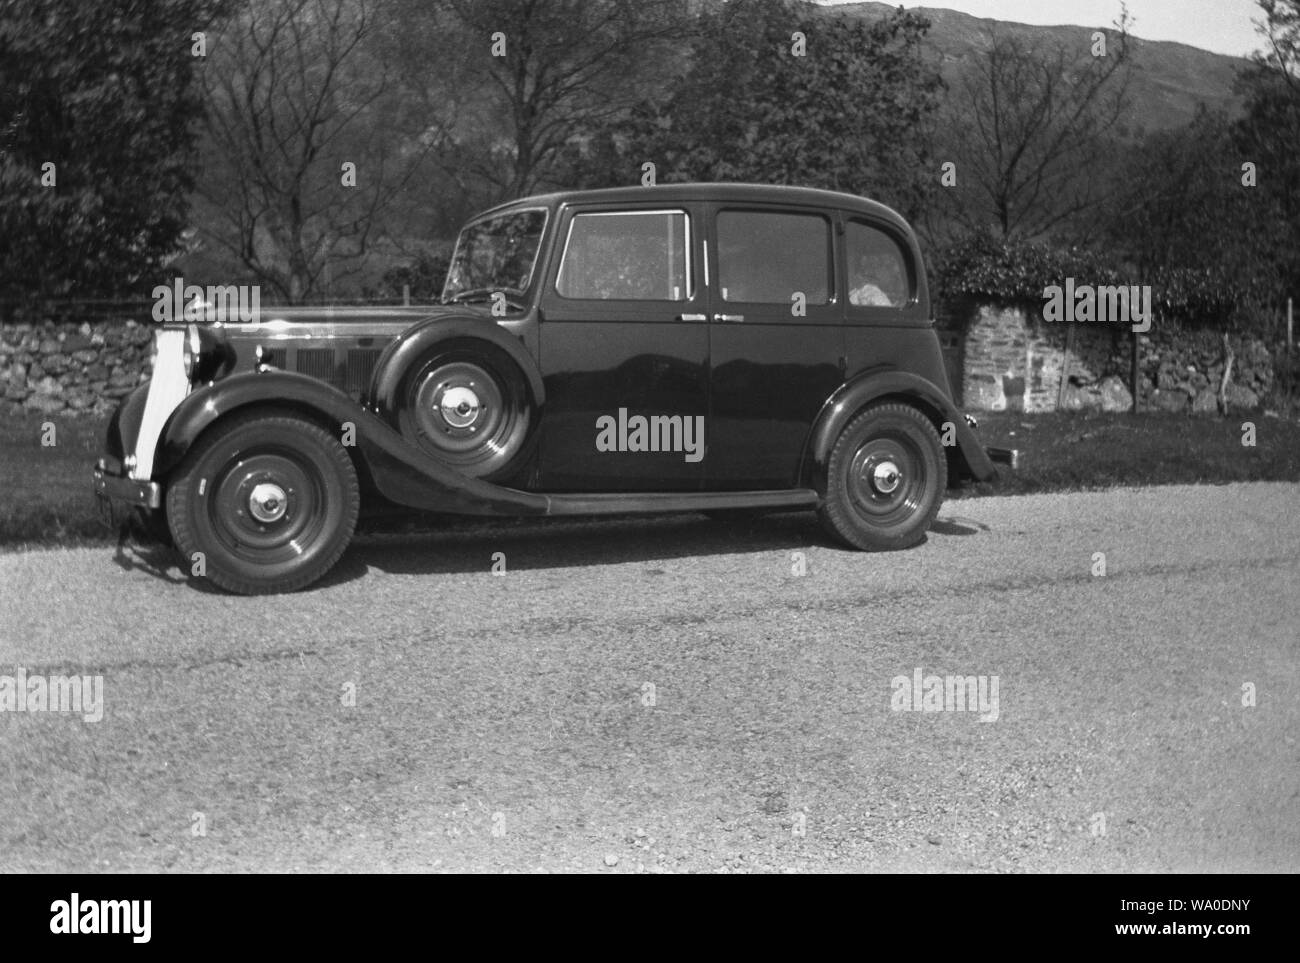 1940s, historical, elegant car of the era parked on a road, England, UK. Stock Photo